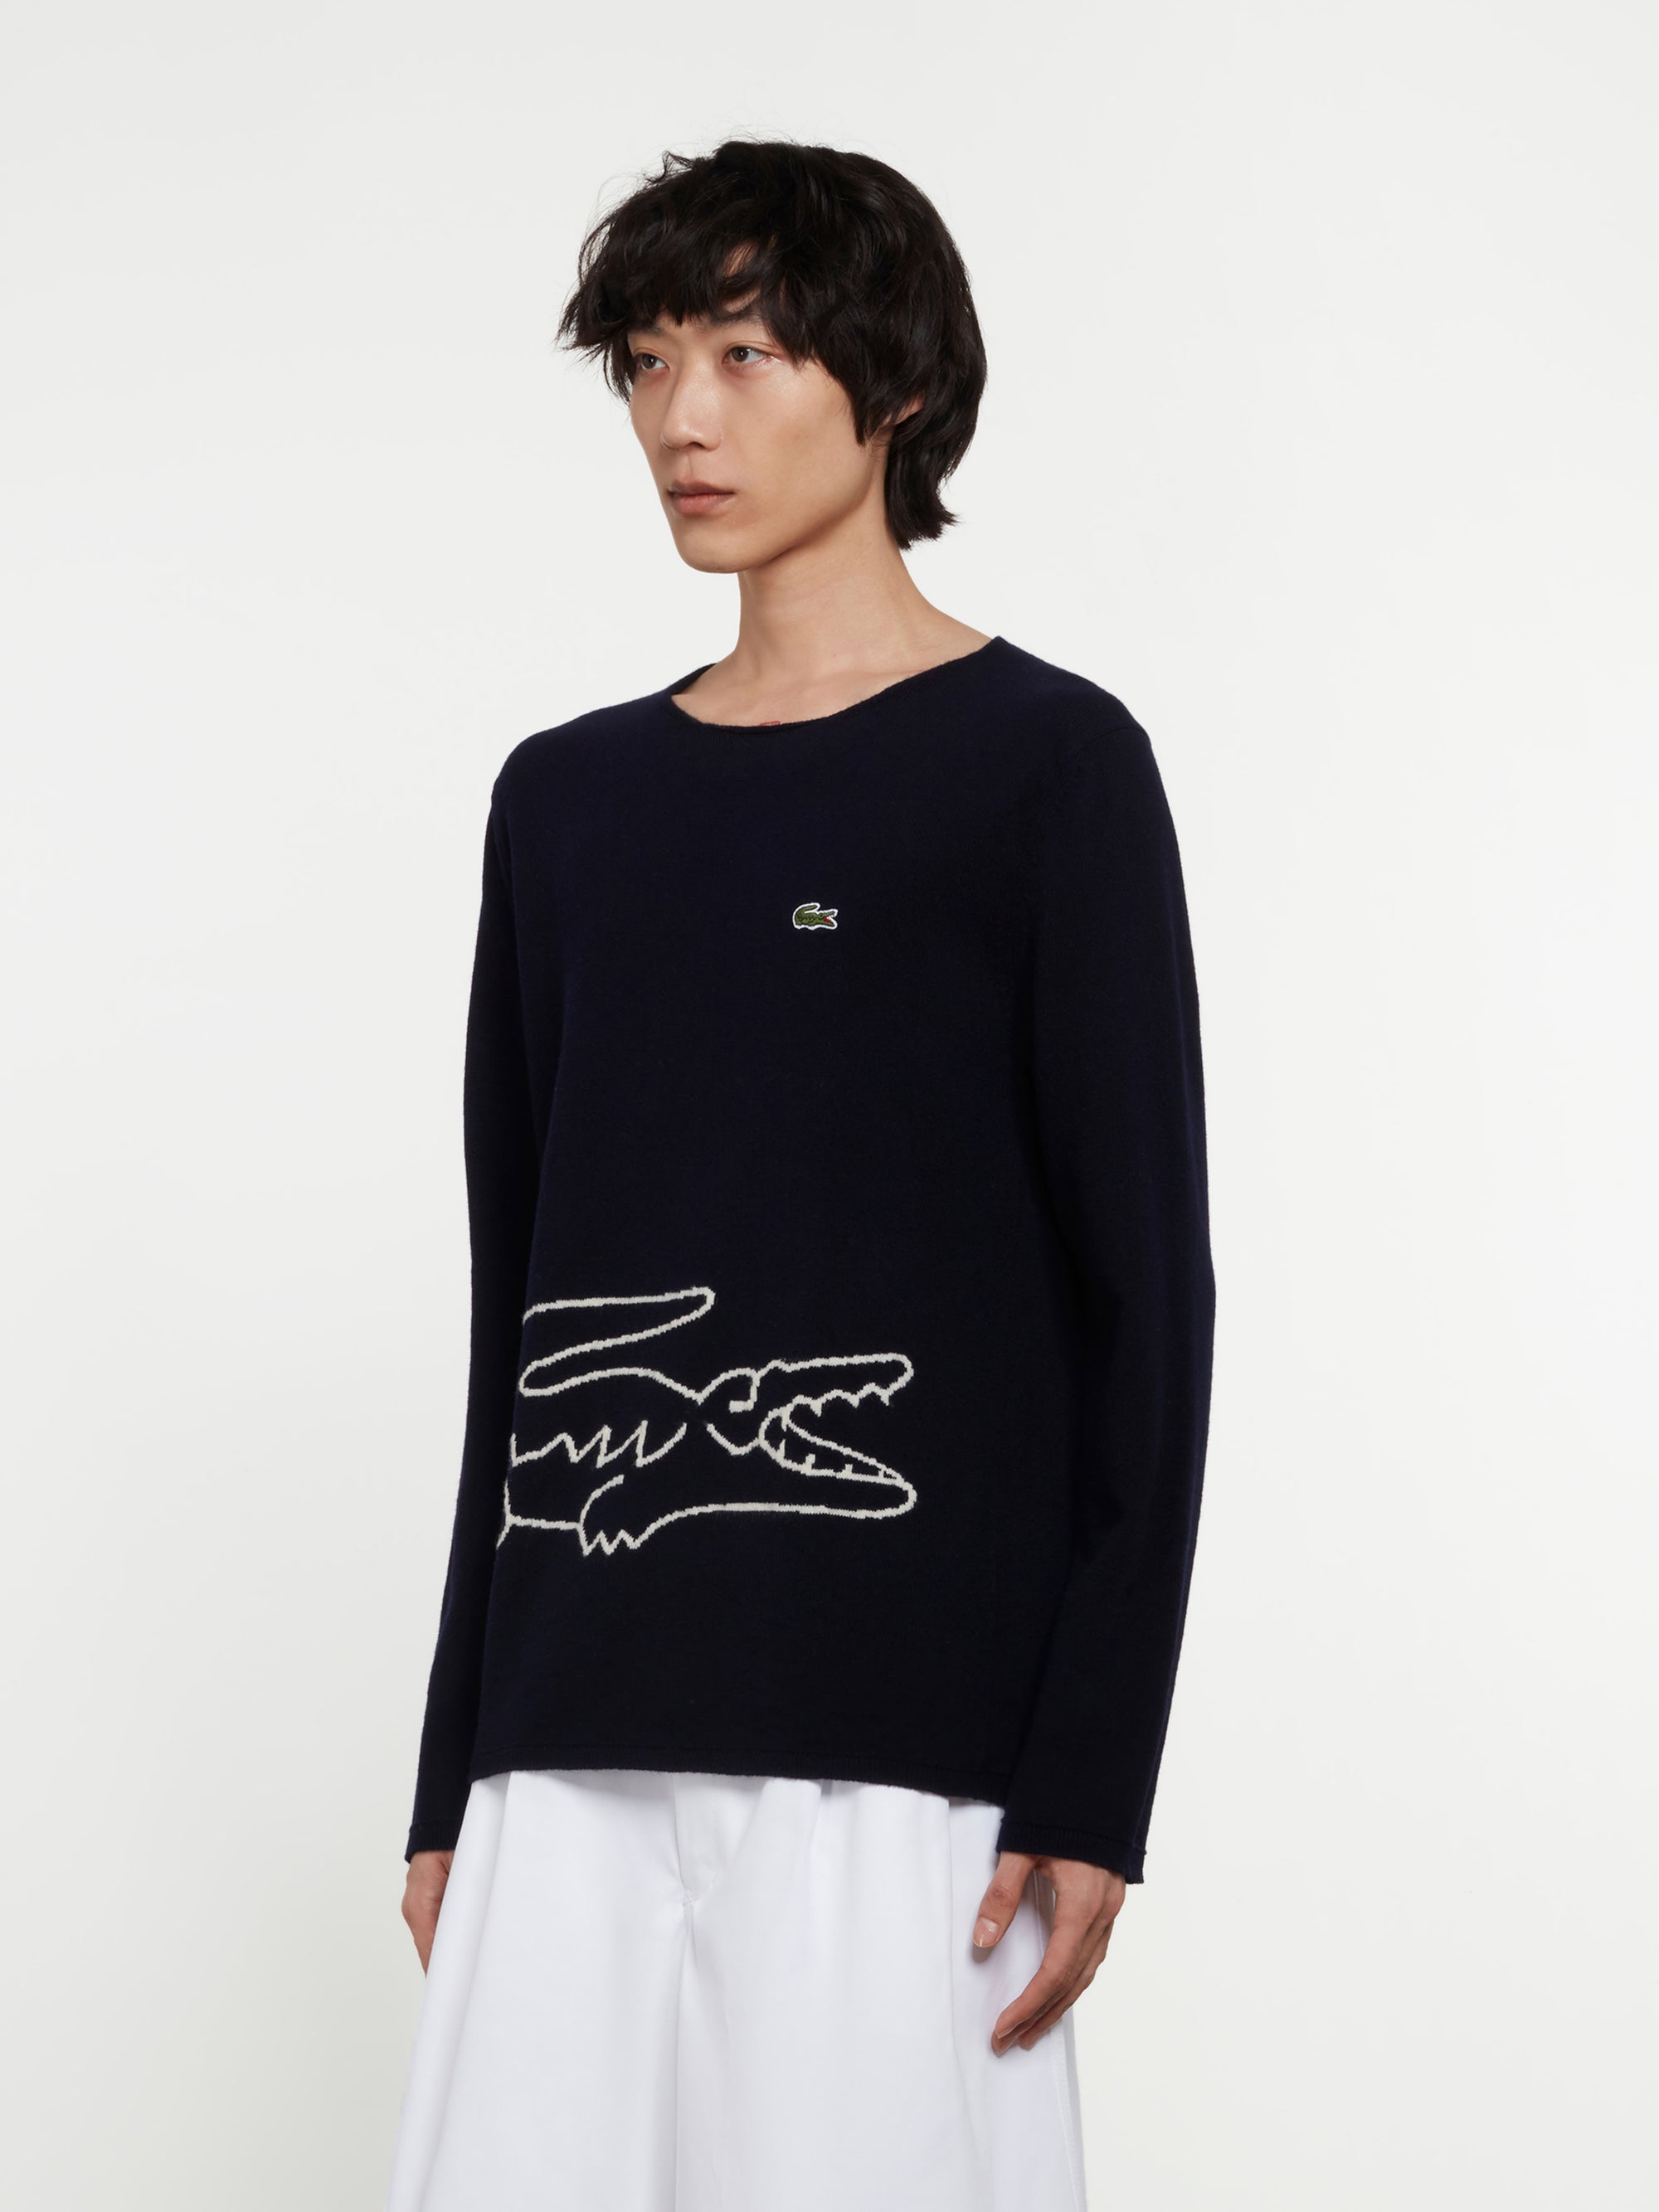 CDG Shirt - Lacoste Men’s Knit Sweater - (Black) view 2